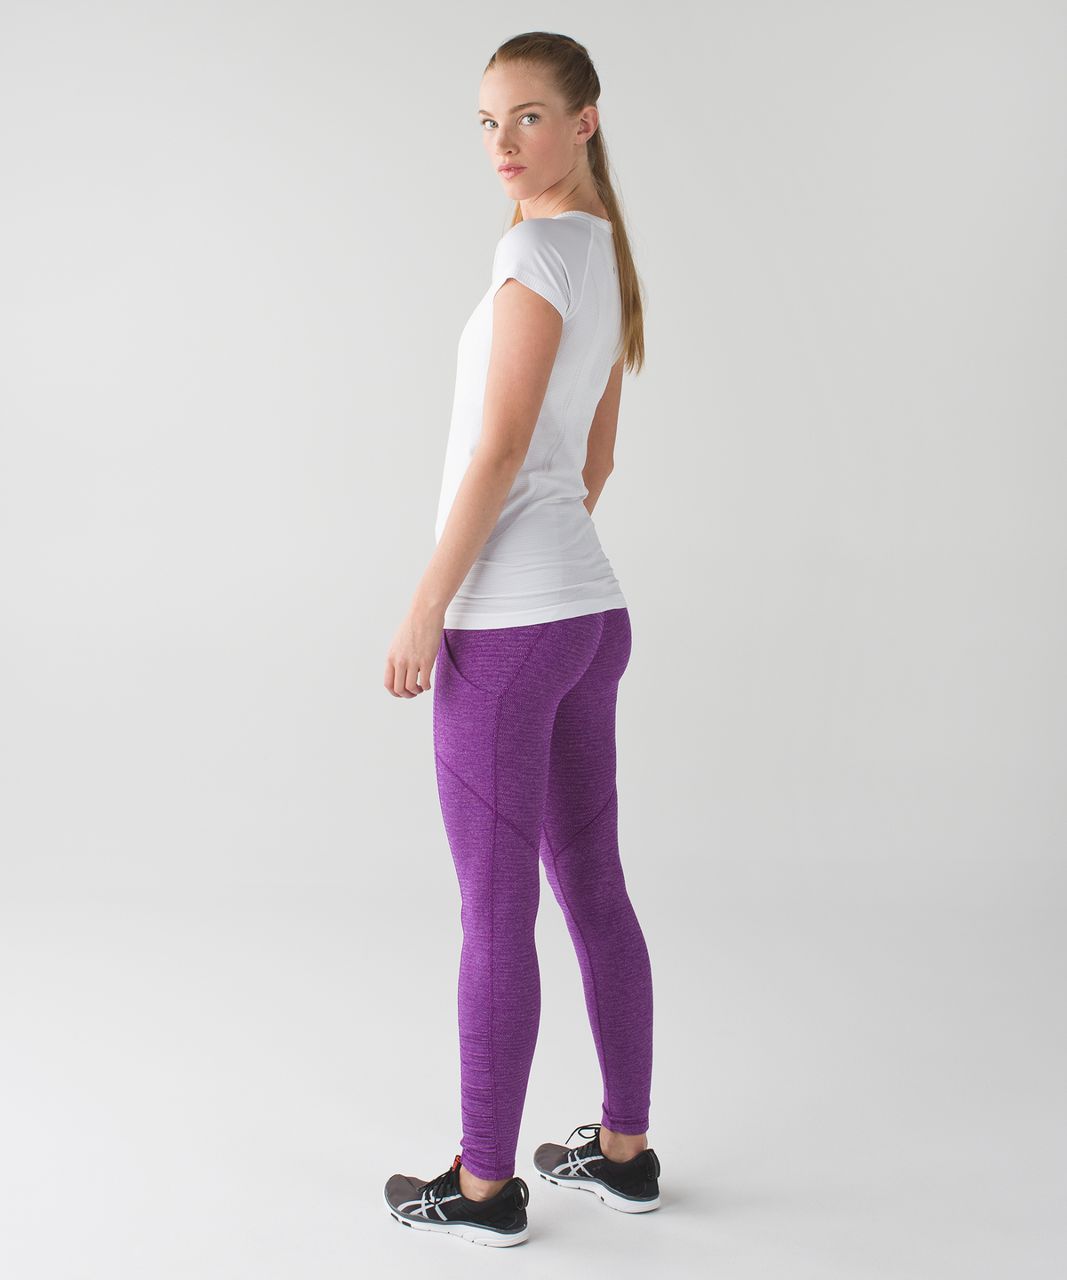 Lululemon Speed Tight IV Leggings Athletic Workout Yoga Gym Ruched Ankle  size 8